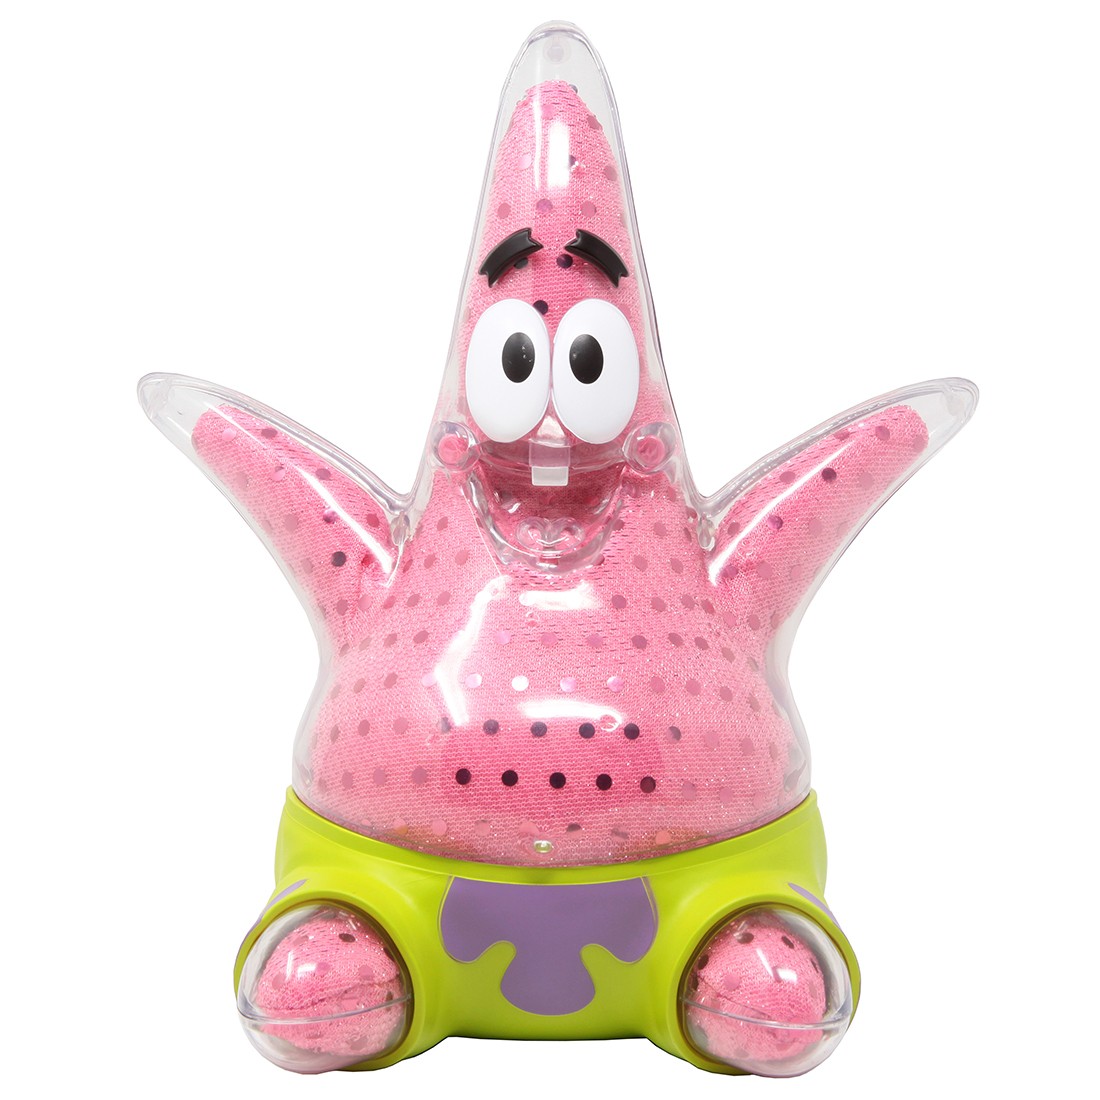 Kidrobot x Nickelodeon SpongeBob SquarePants Original Patrick Star 8 Inch Vinyl Art Figure (pink)